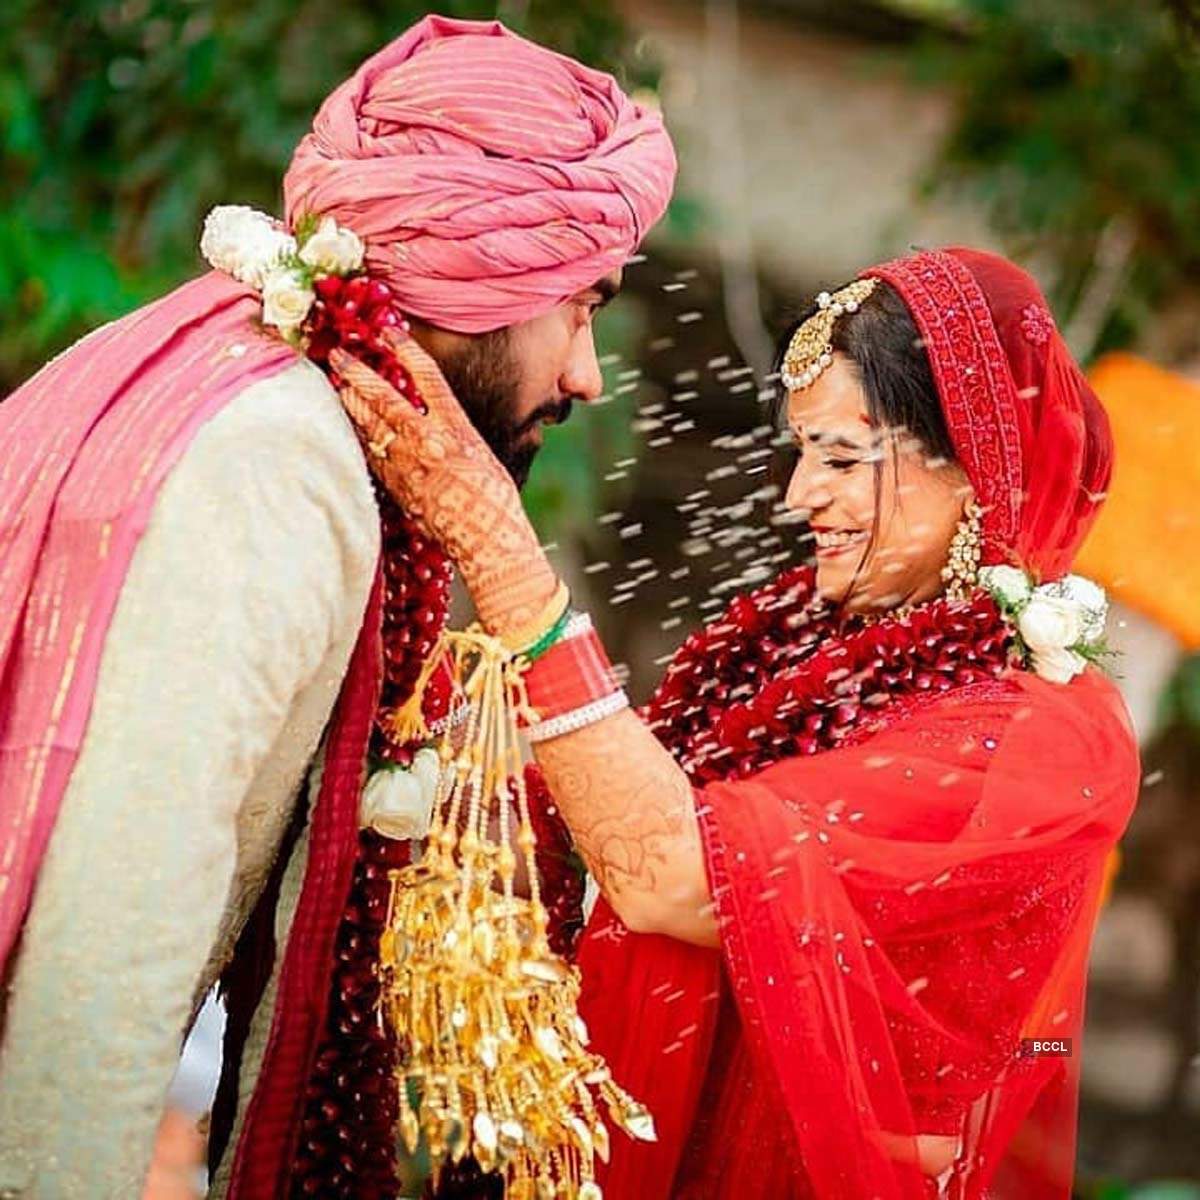 Mesmerising wedding pictures of Mona Singh and investment banker husband Shyam Rajgopalan